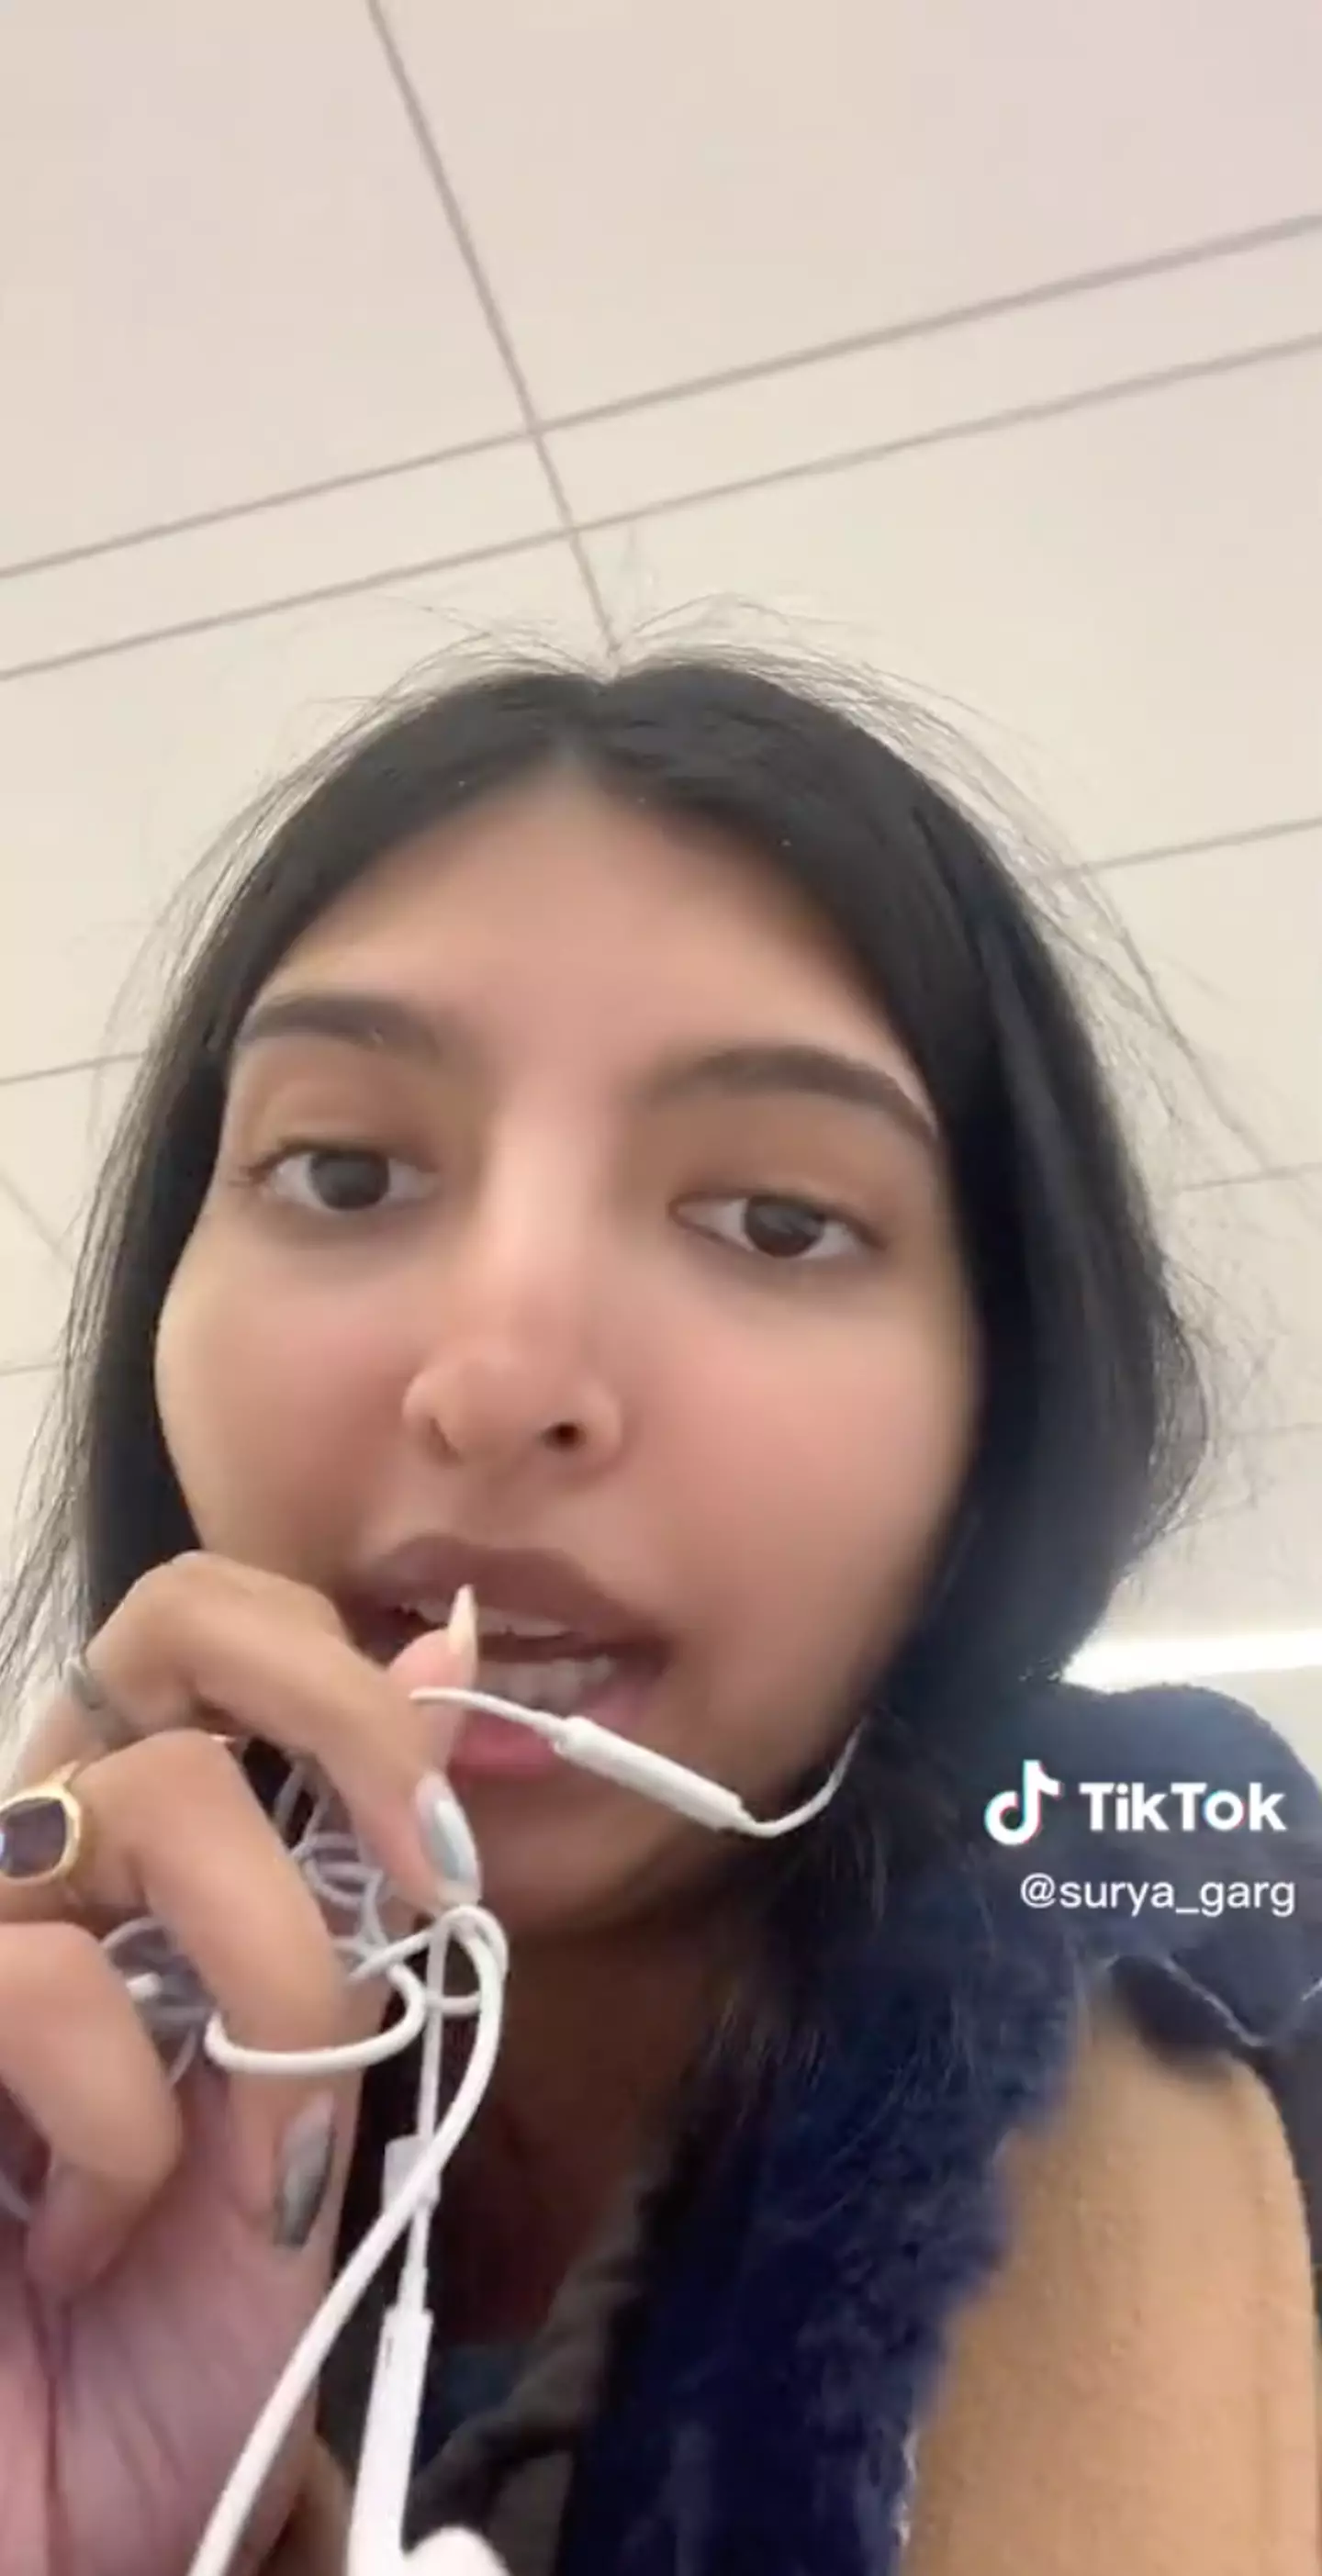 Surya shared her awkward flight experience on TikTok.